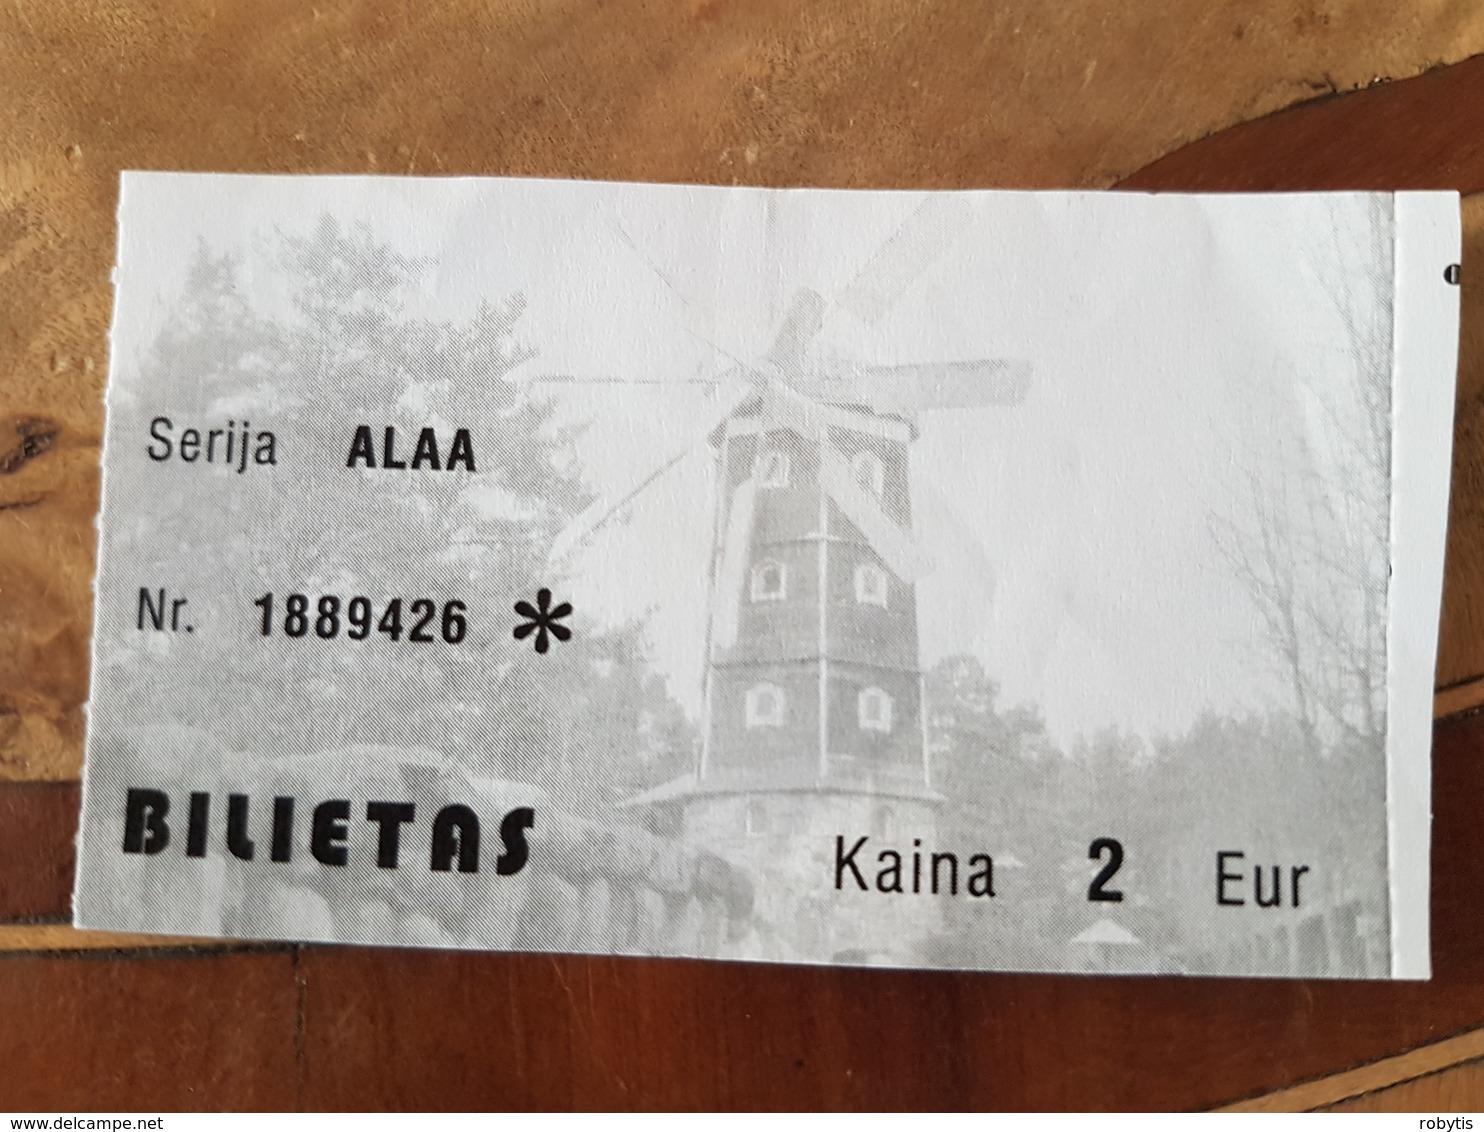 Lithuania Birston Sculpture Park 2019 Ticket - Tickets - Vouchers